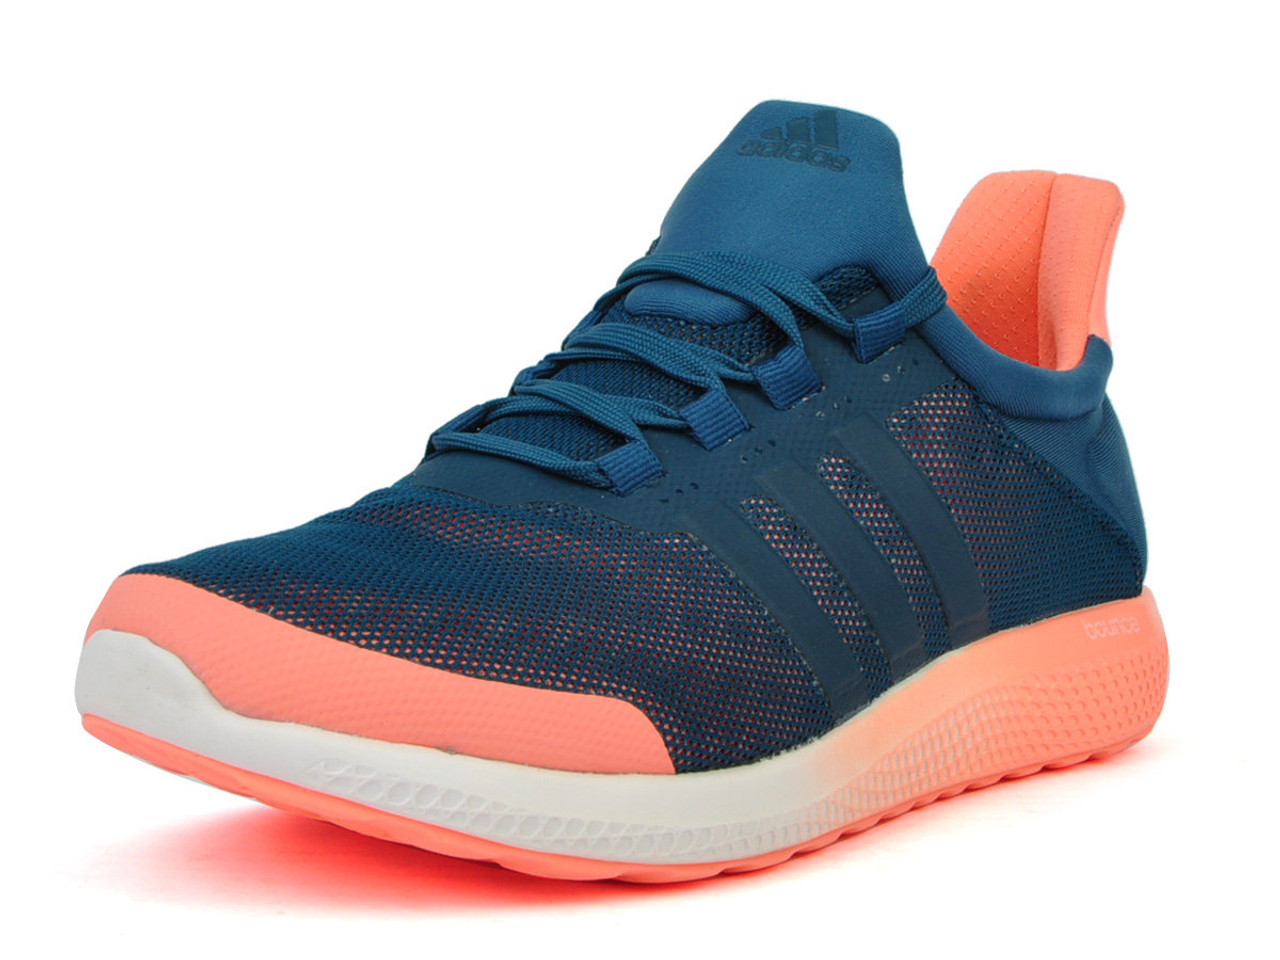 Adidas Women's CC Sonic Running Shoe - Grey | Discount Adidas Ladies  Athletic Shoe & More - Shoolu.com | Shoolu.com